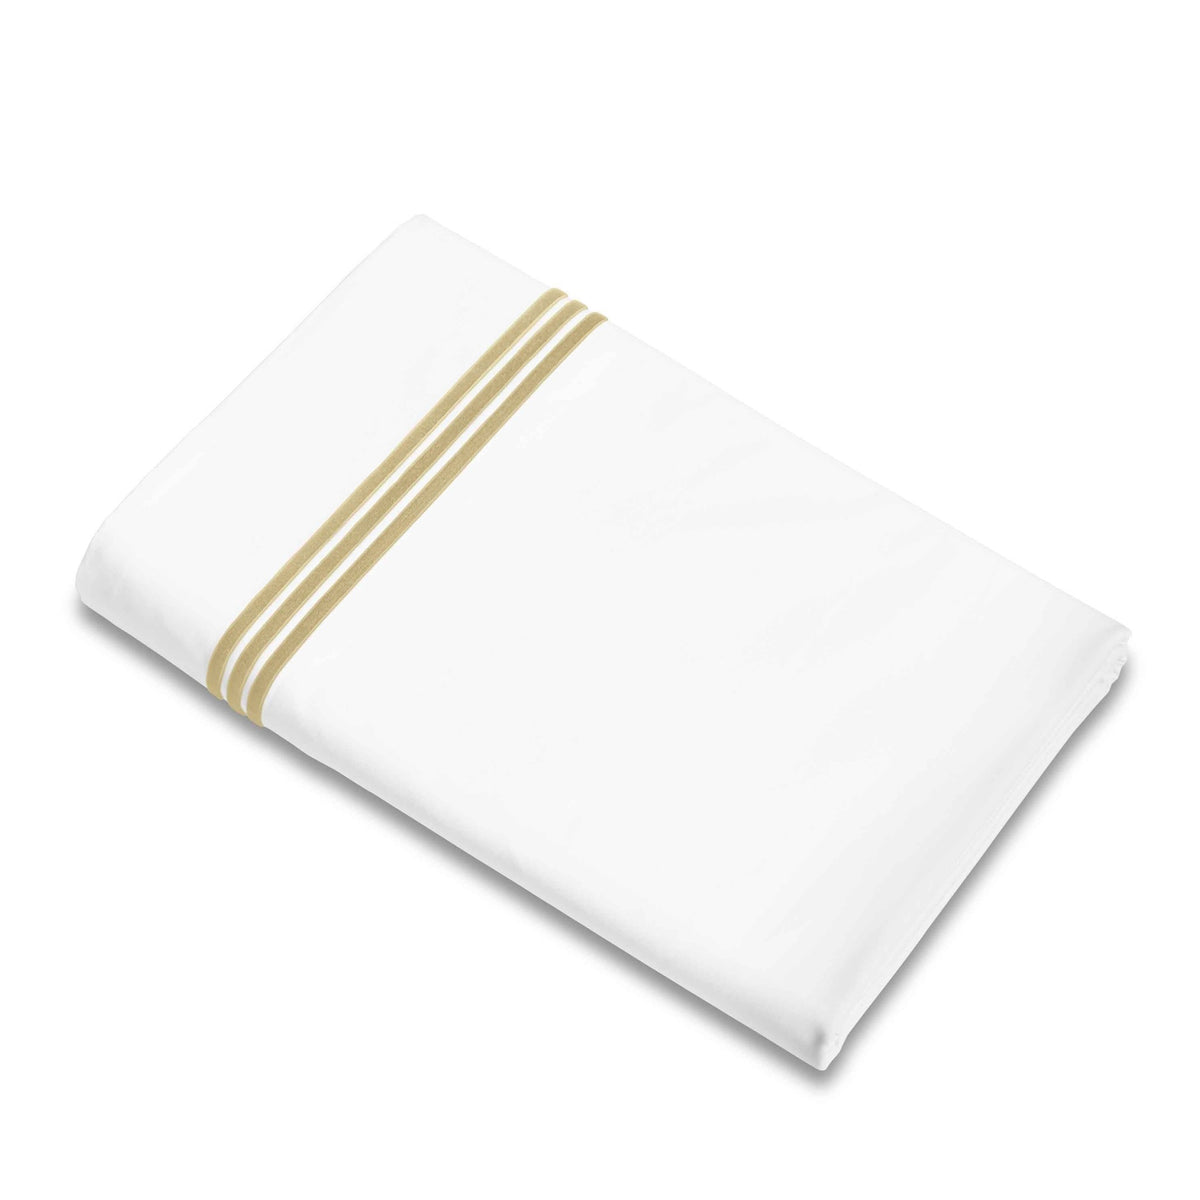 Flat Sheet of Signoria Platinum Percale Bedding in White/Caramel Color